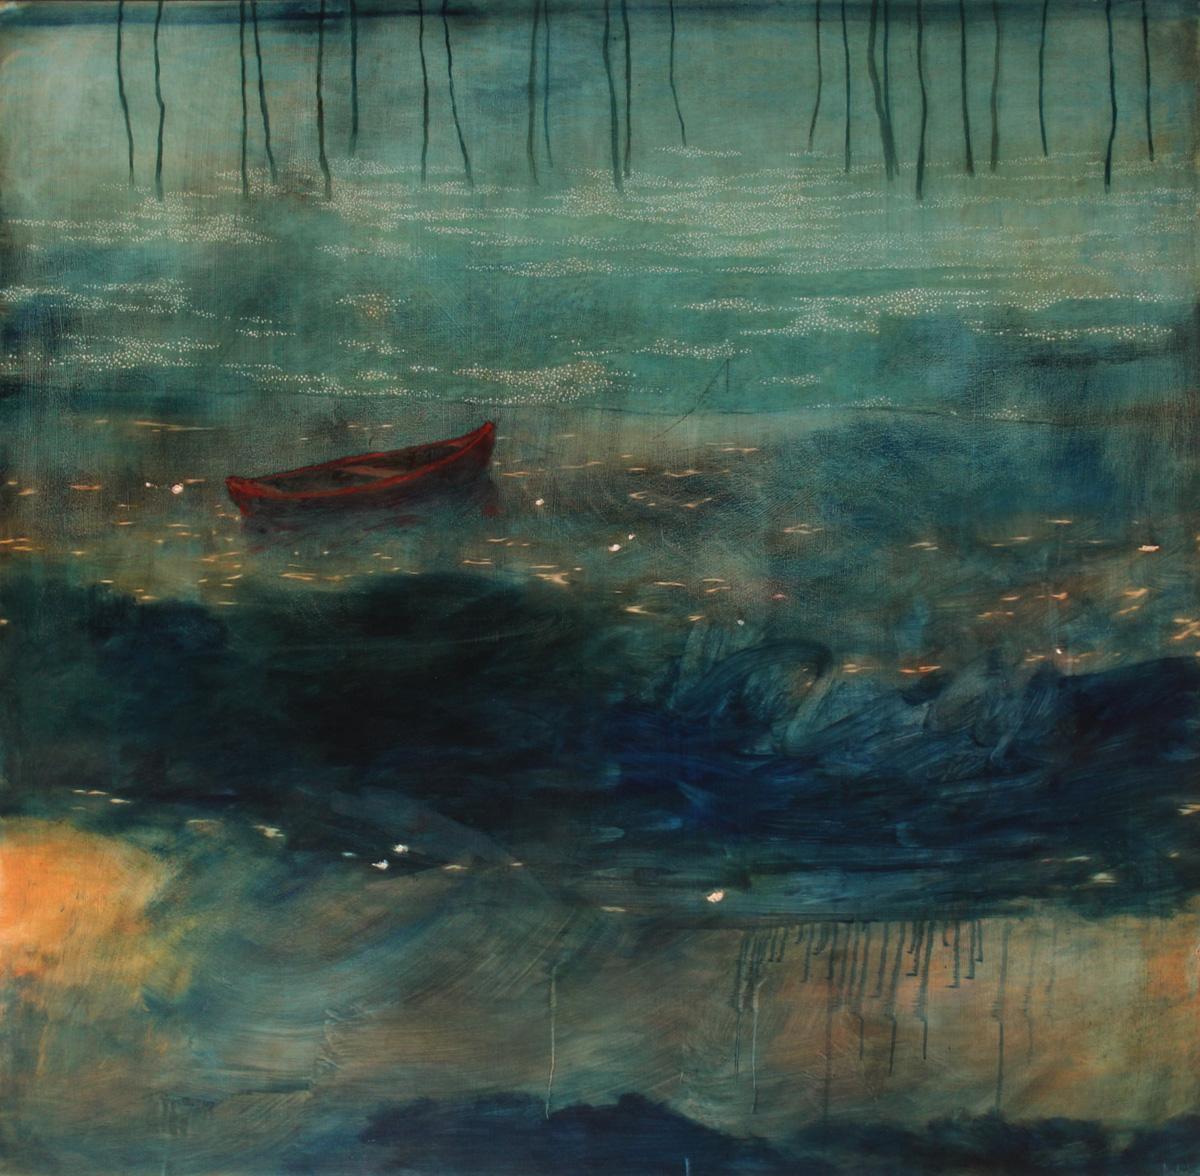 daniel-ablitt-the-red-boat-(amber-reflections)